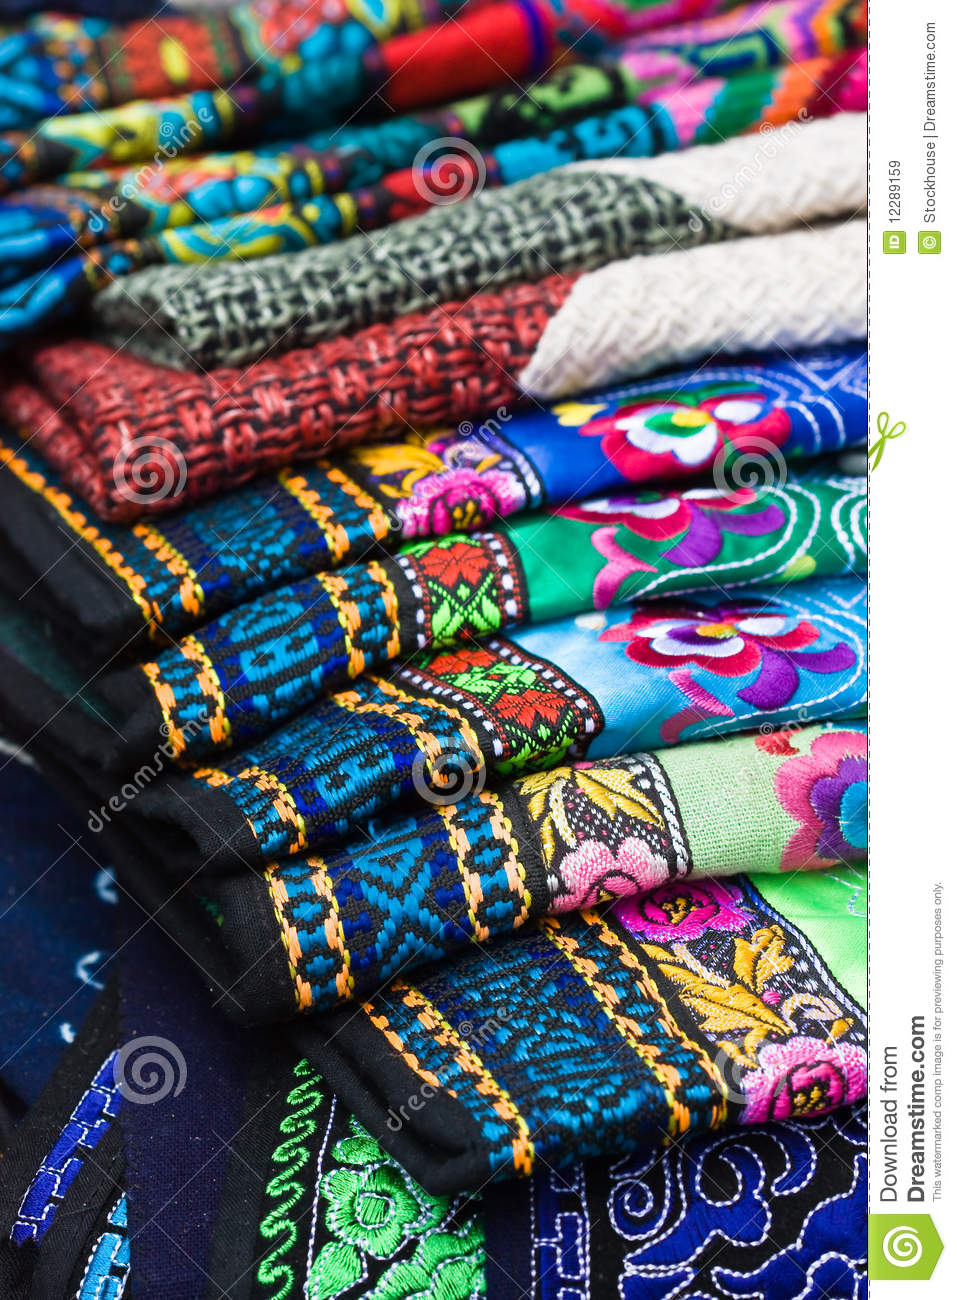 Handmade Bai Minority Textiles Royalty Free Stock Images   Image    